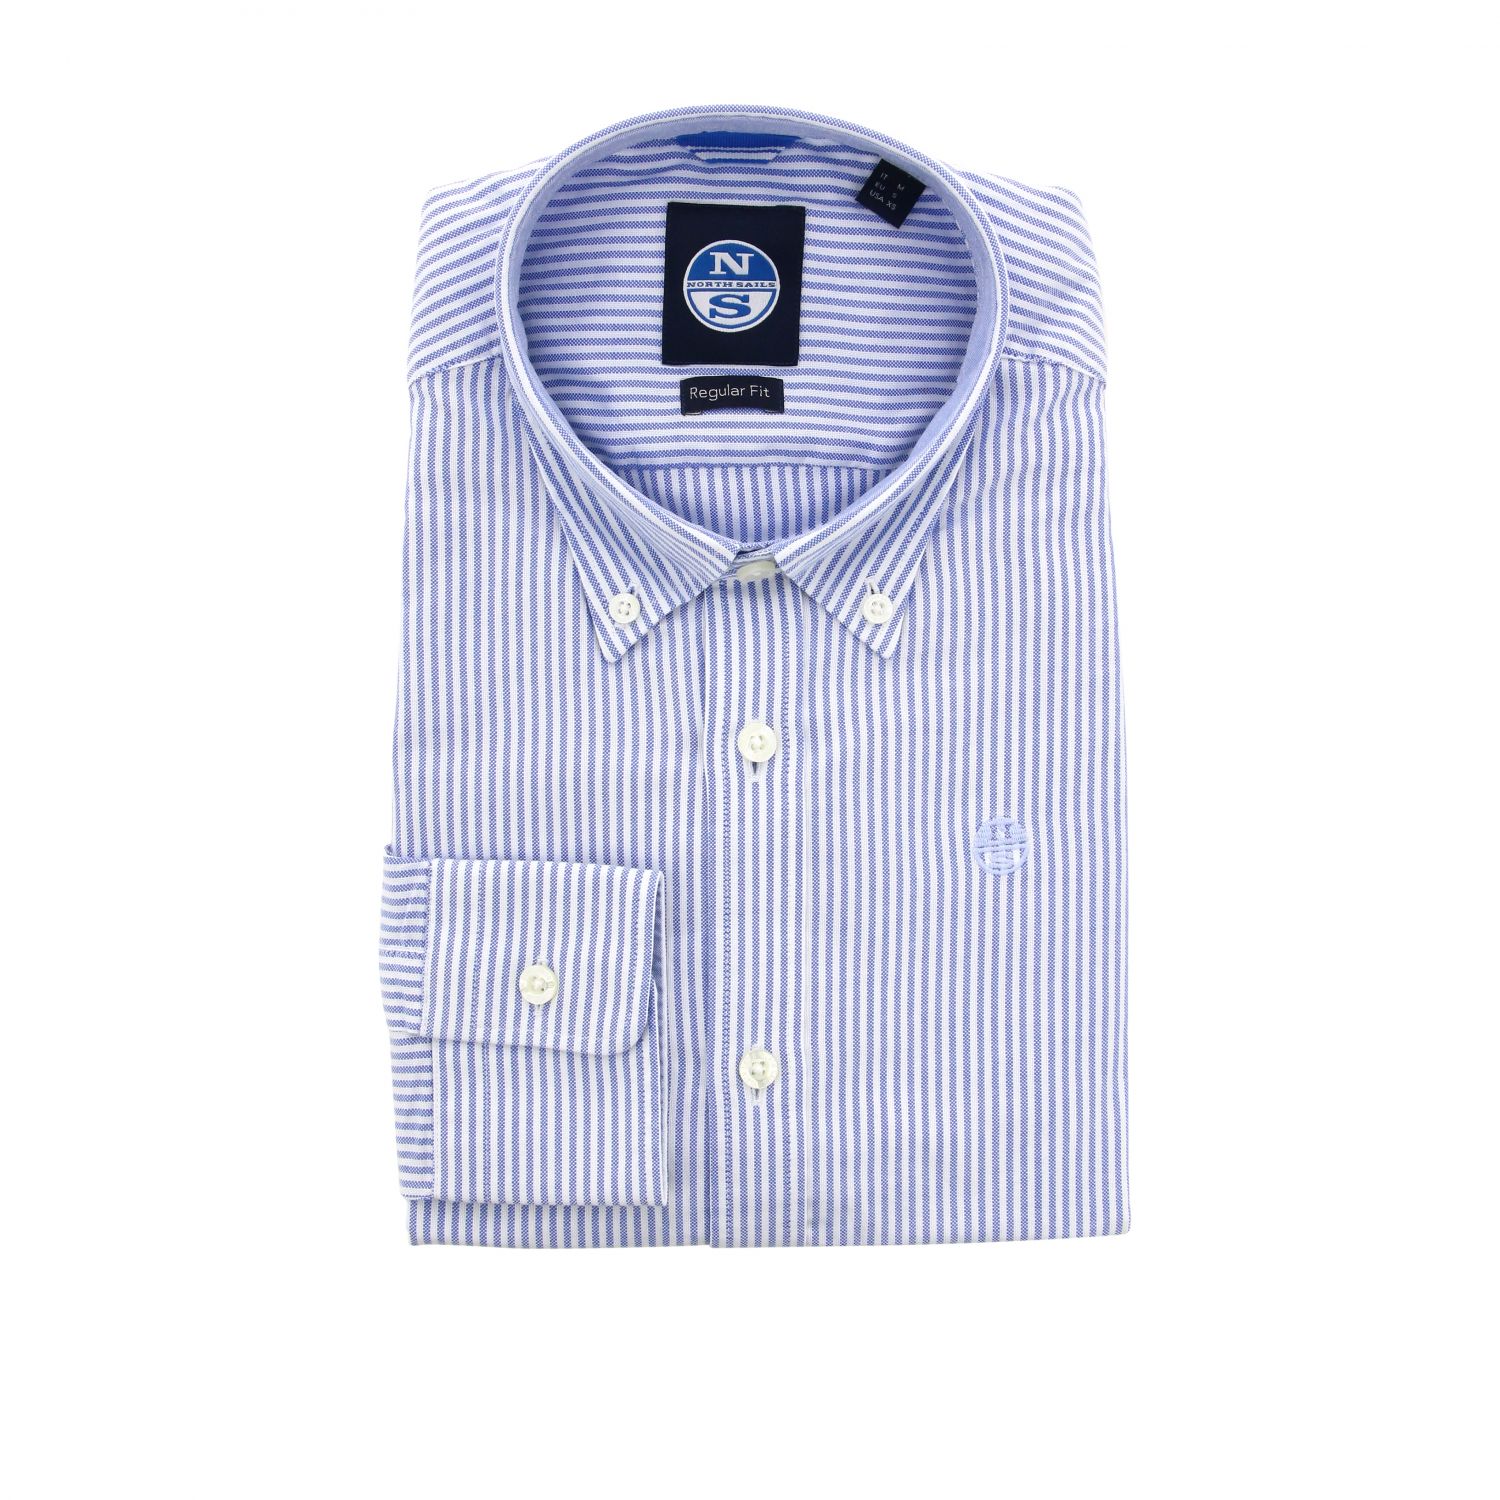 North Sails Outlet: shirt for man - Blue | North Sails shirt 663487 ...